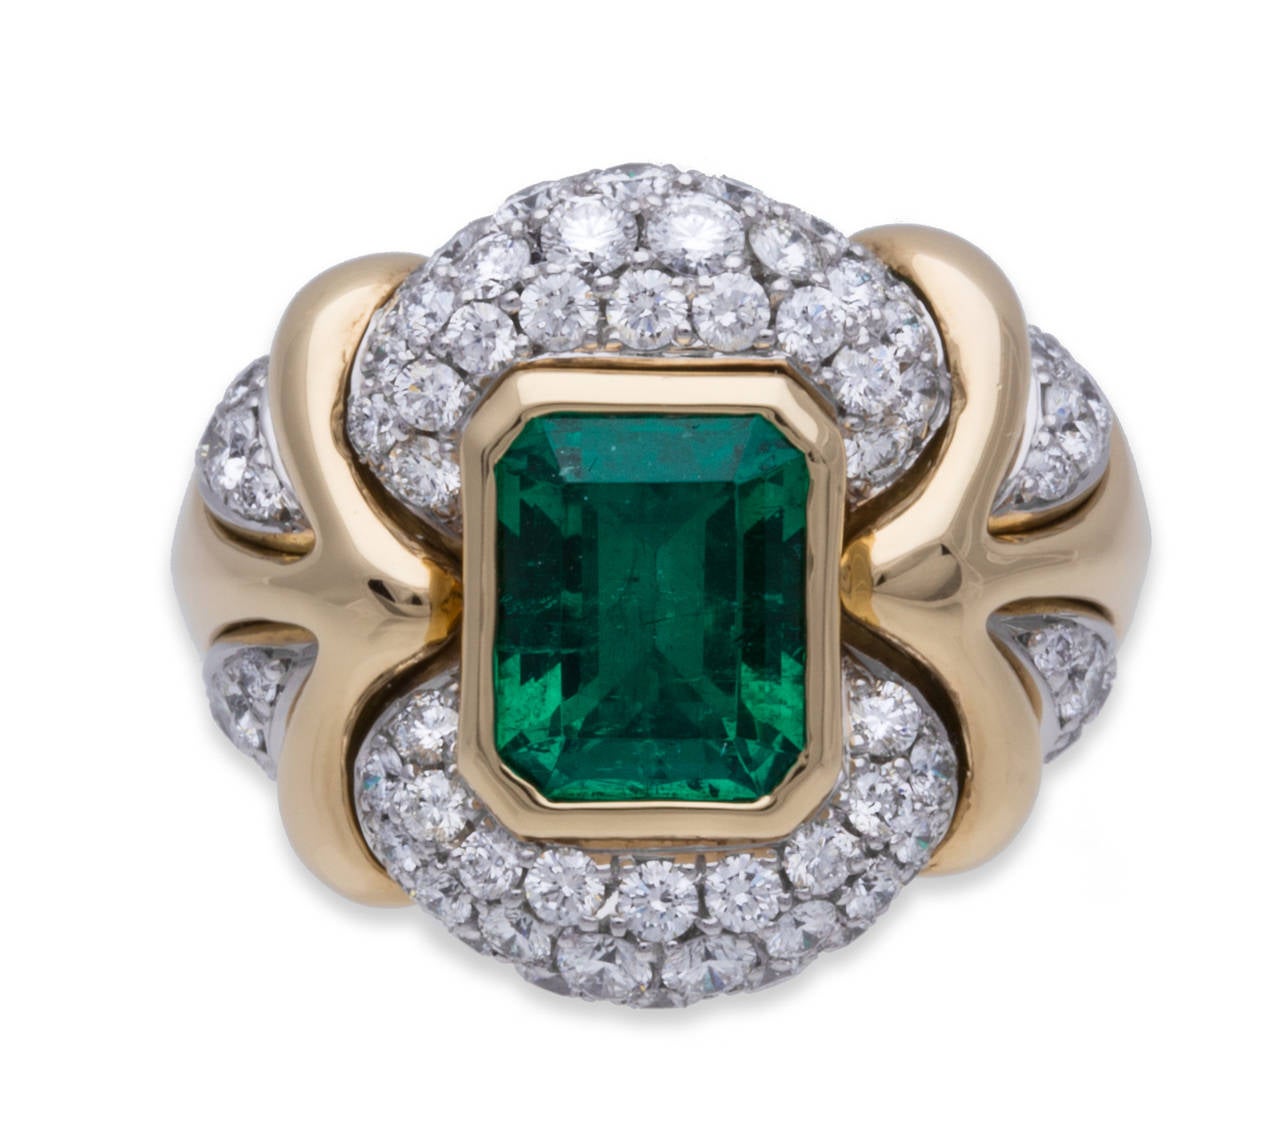 Columbian Emerald & Diamond Pave Ring in 18K Yellow & White Gold.
AGL Certified Natural Beryl Emerald of Columbian Origin, 3.17ct Rectangular Emerald Cut. Approx. 3.00ct in diamonds. Ring Size US 7/ EUR 54